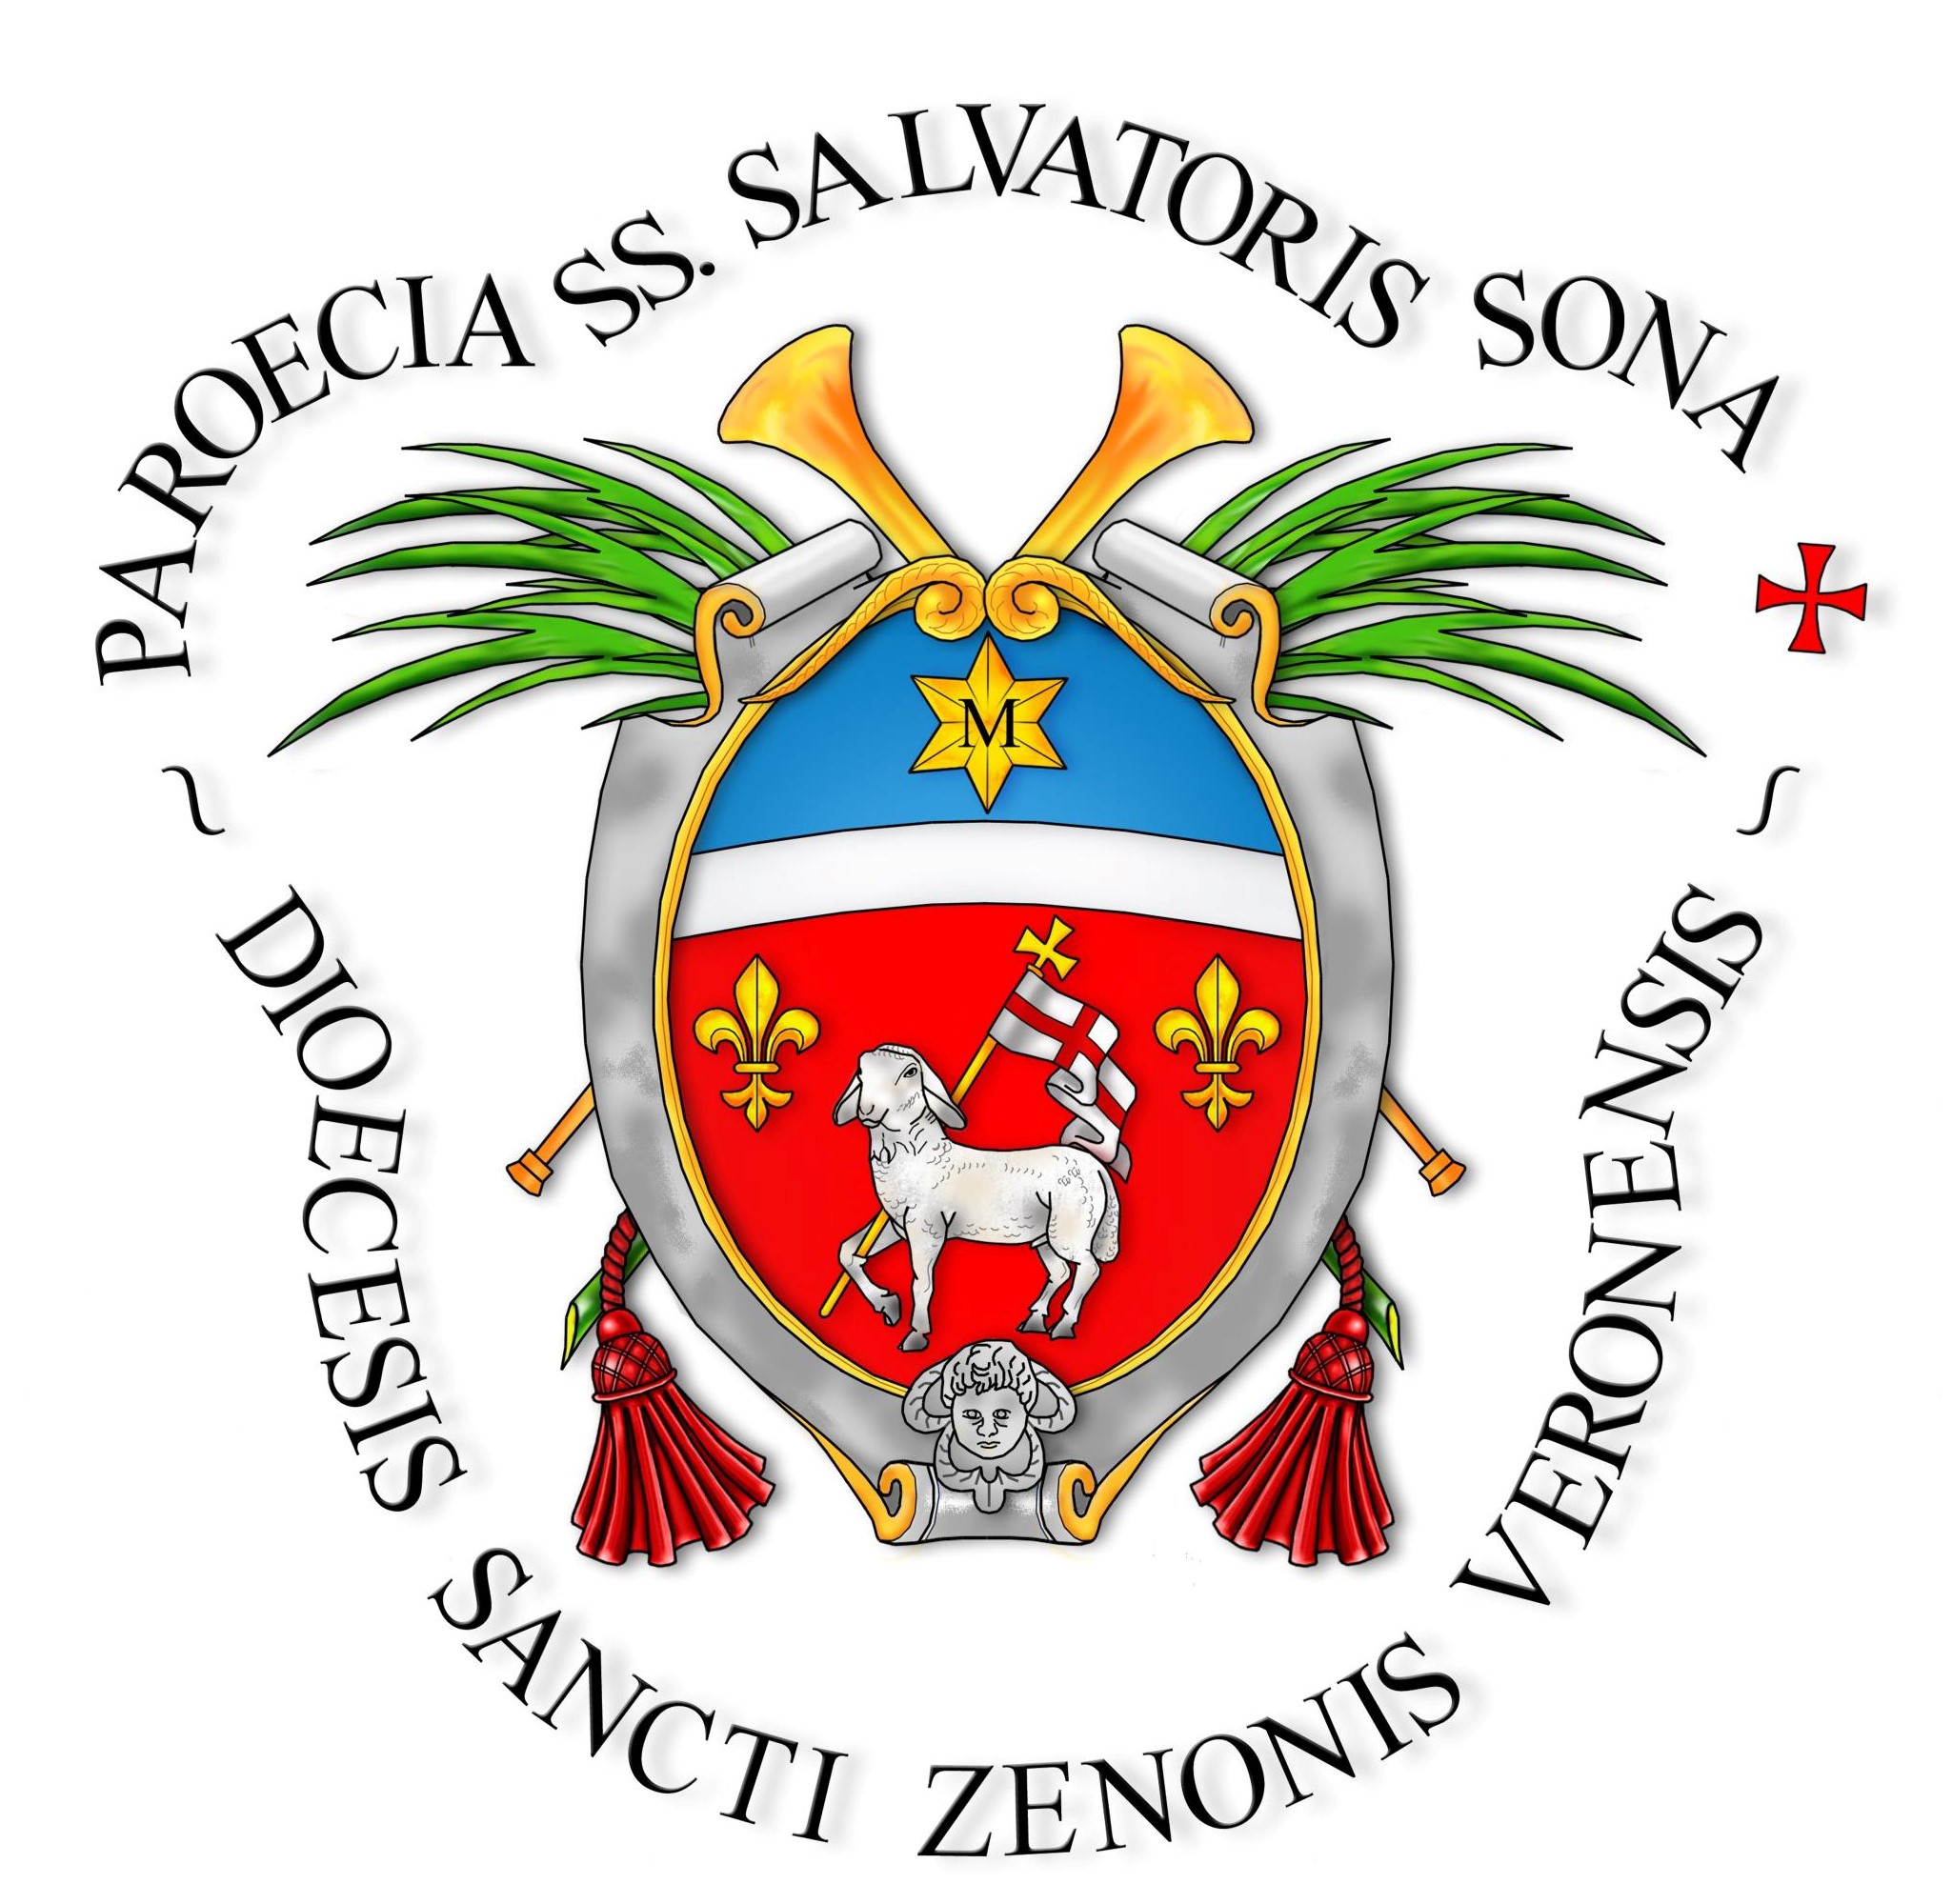 Parrocchia San Salvatore Sona